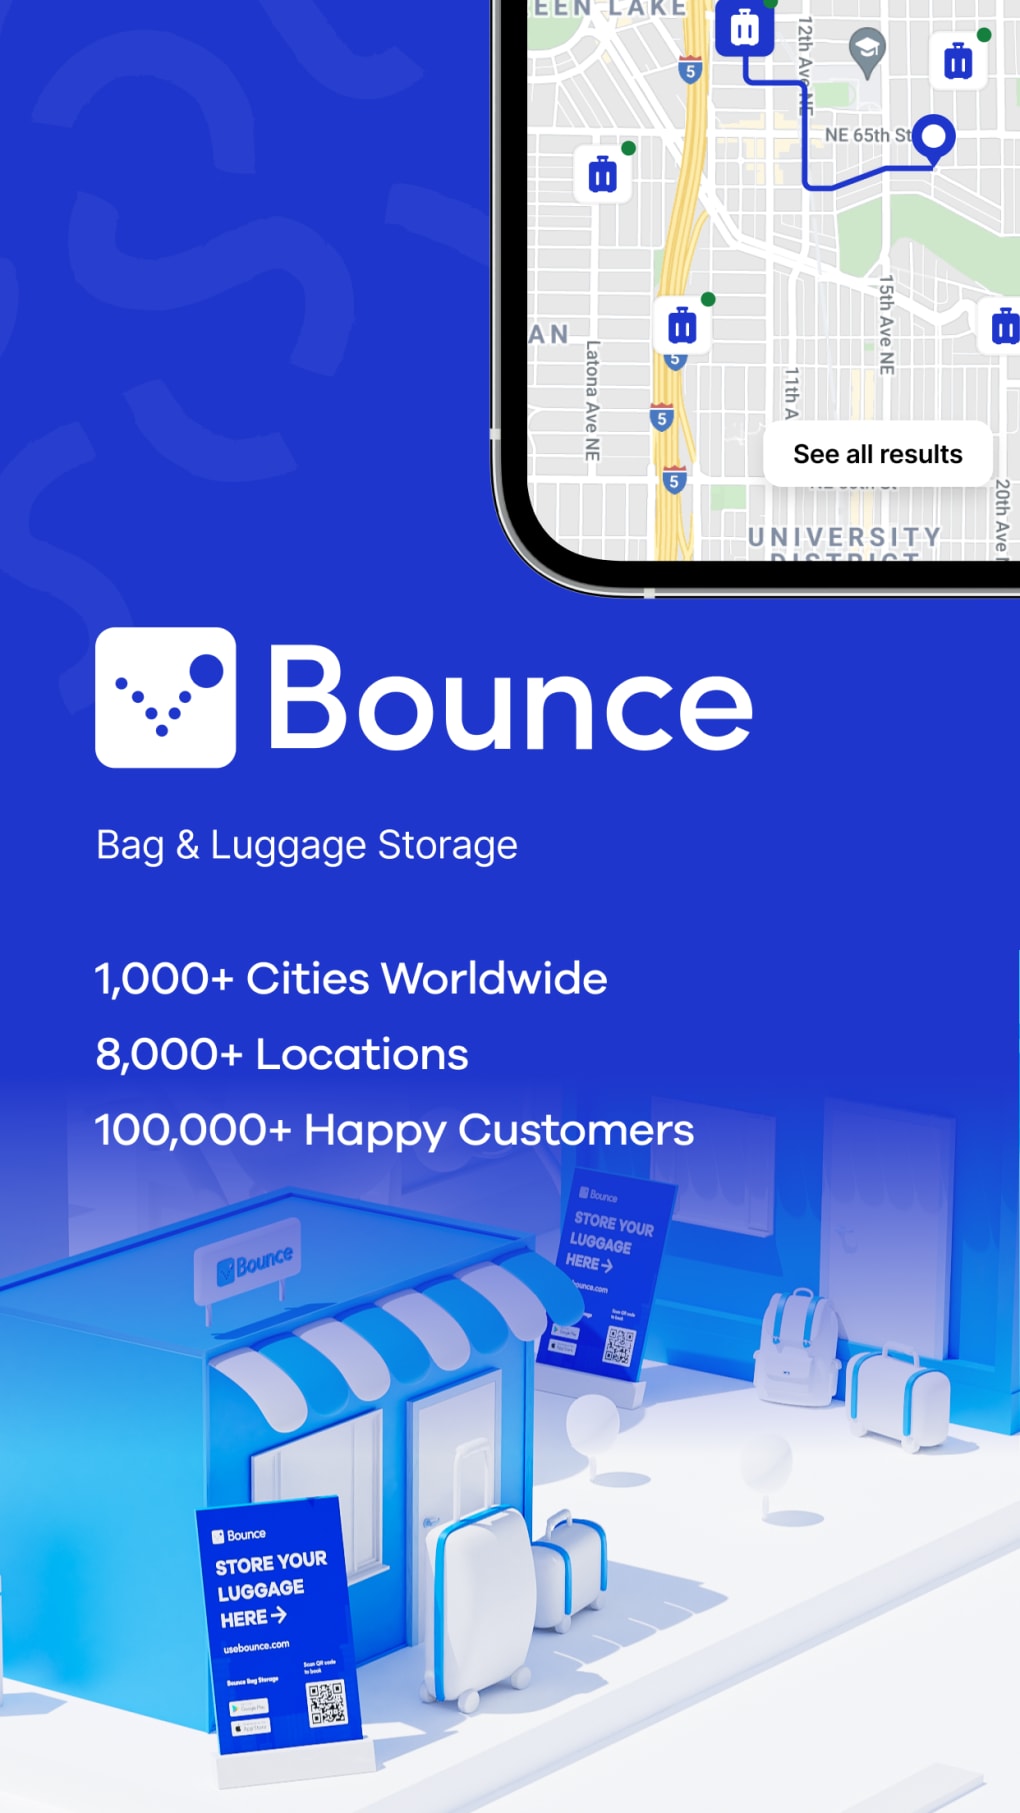 Luggage Storage - Mobile Storage Solution